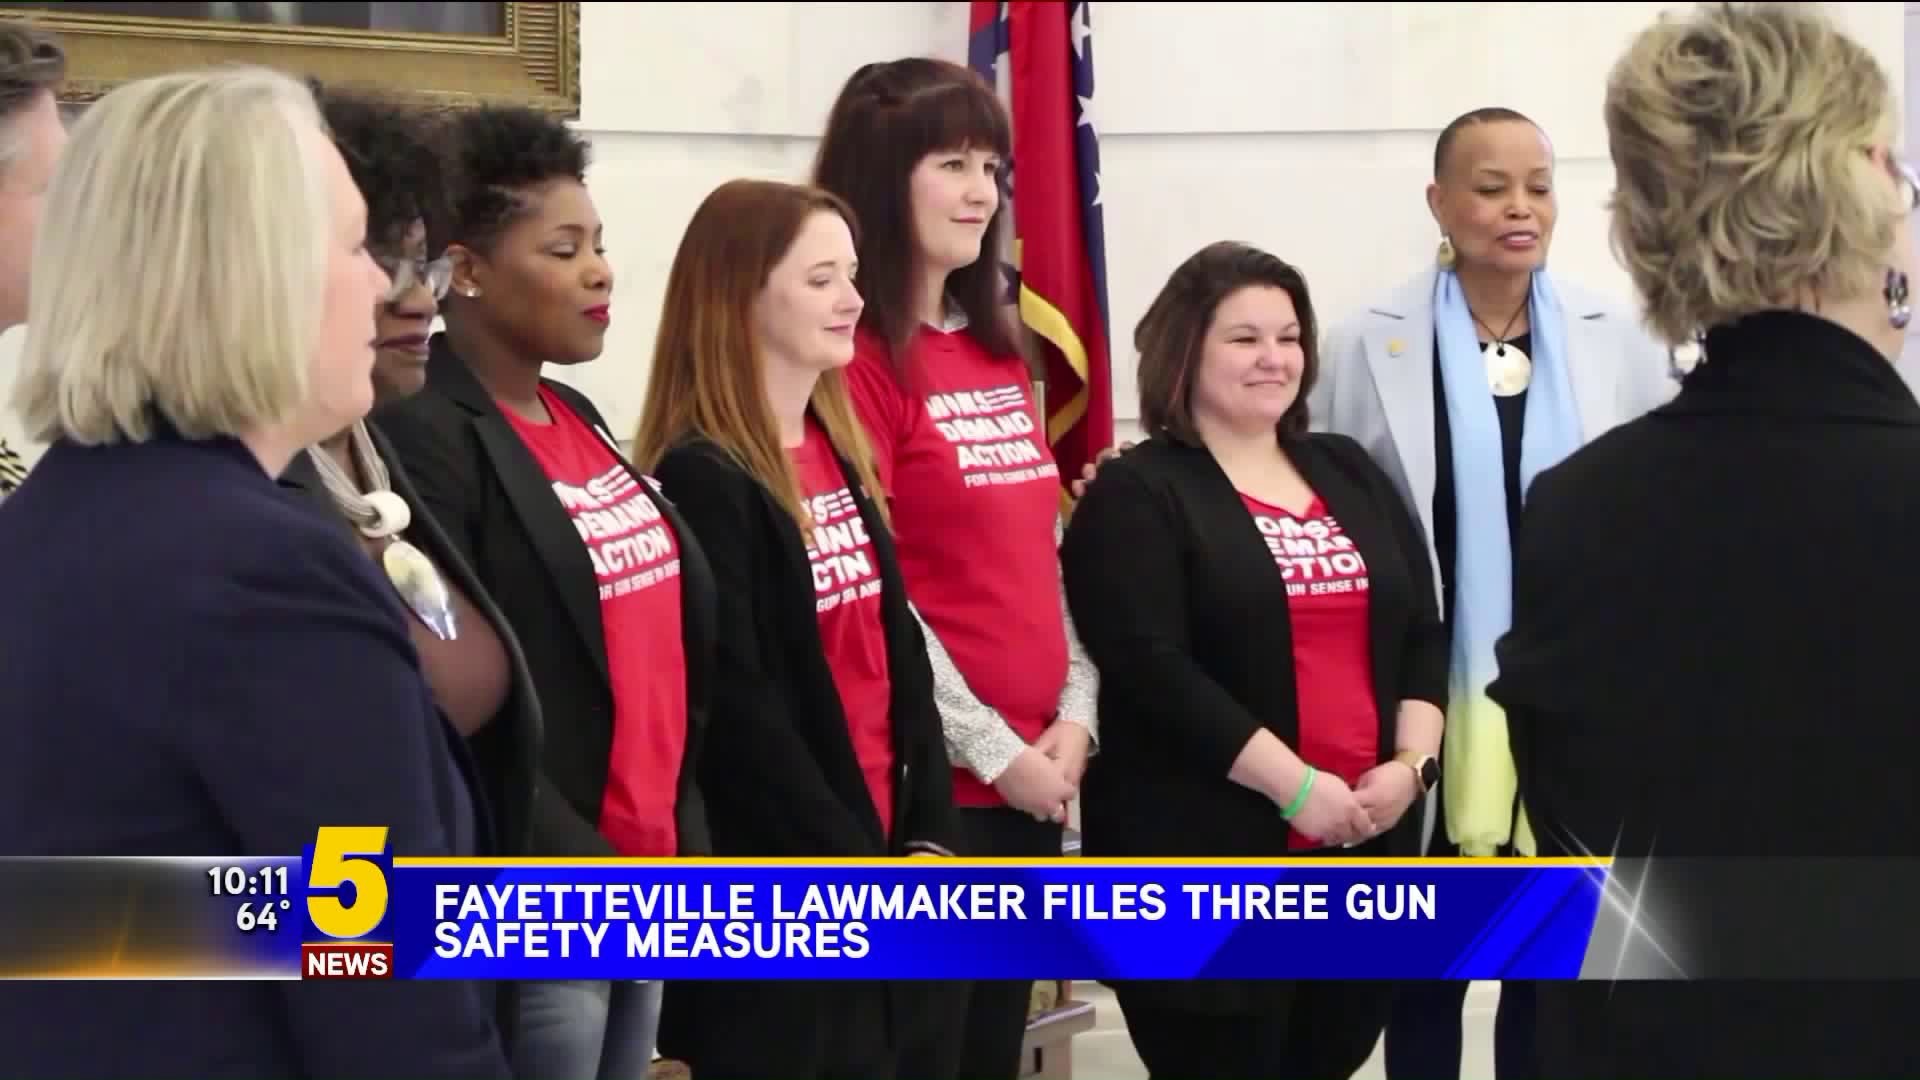 Fayetteville Lawmaker Files Three Gun Safety Measures